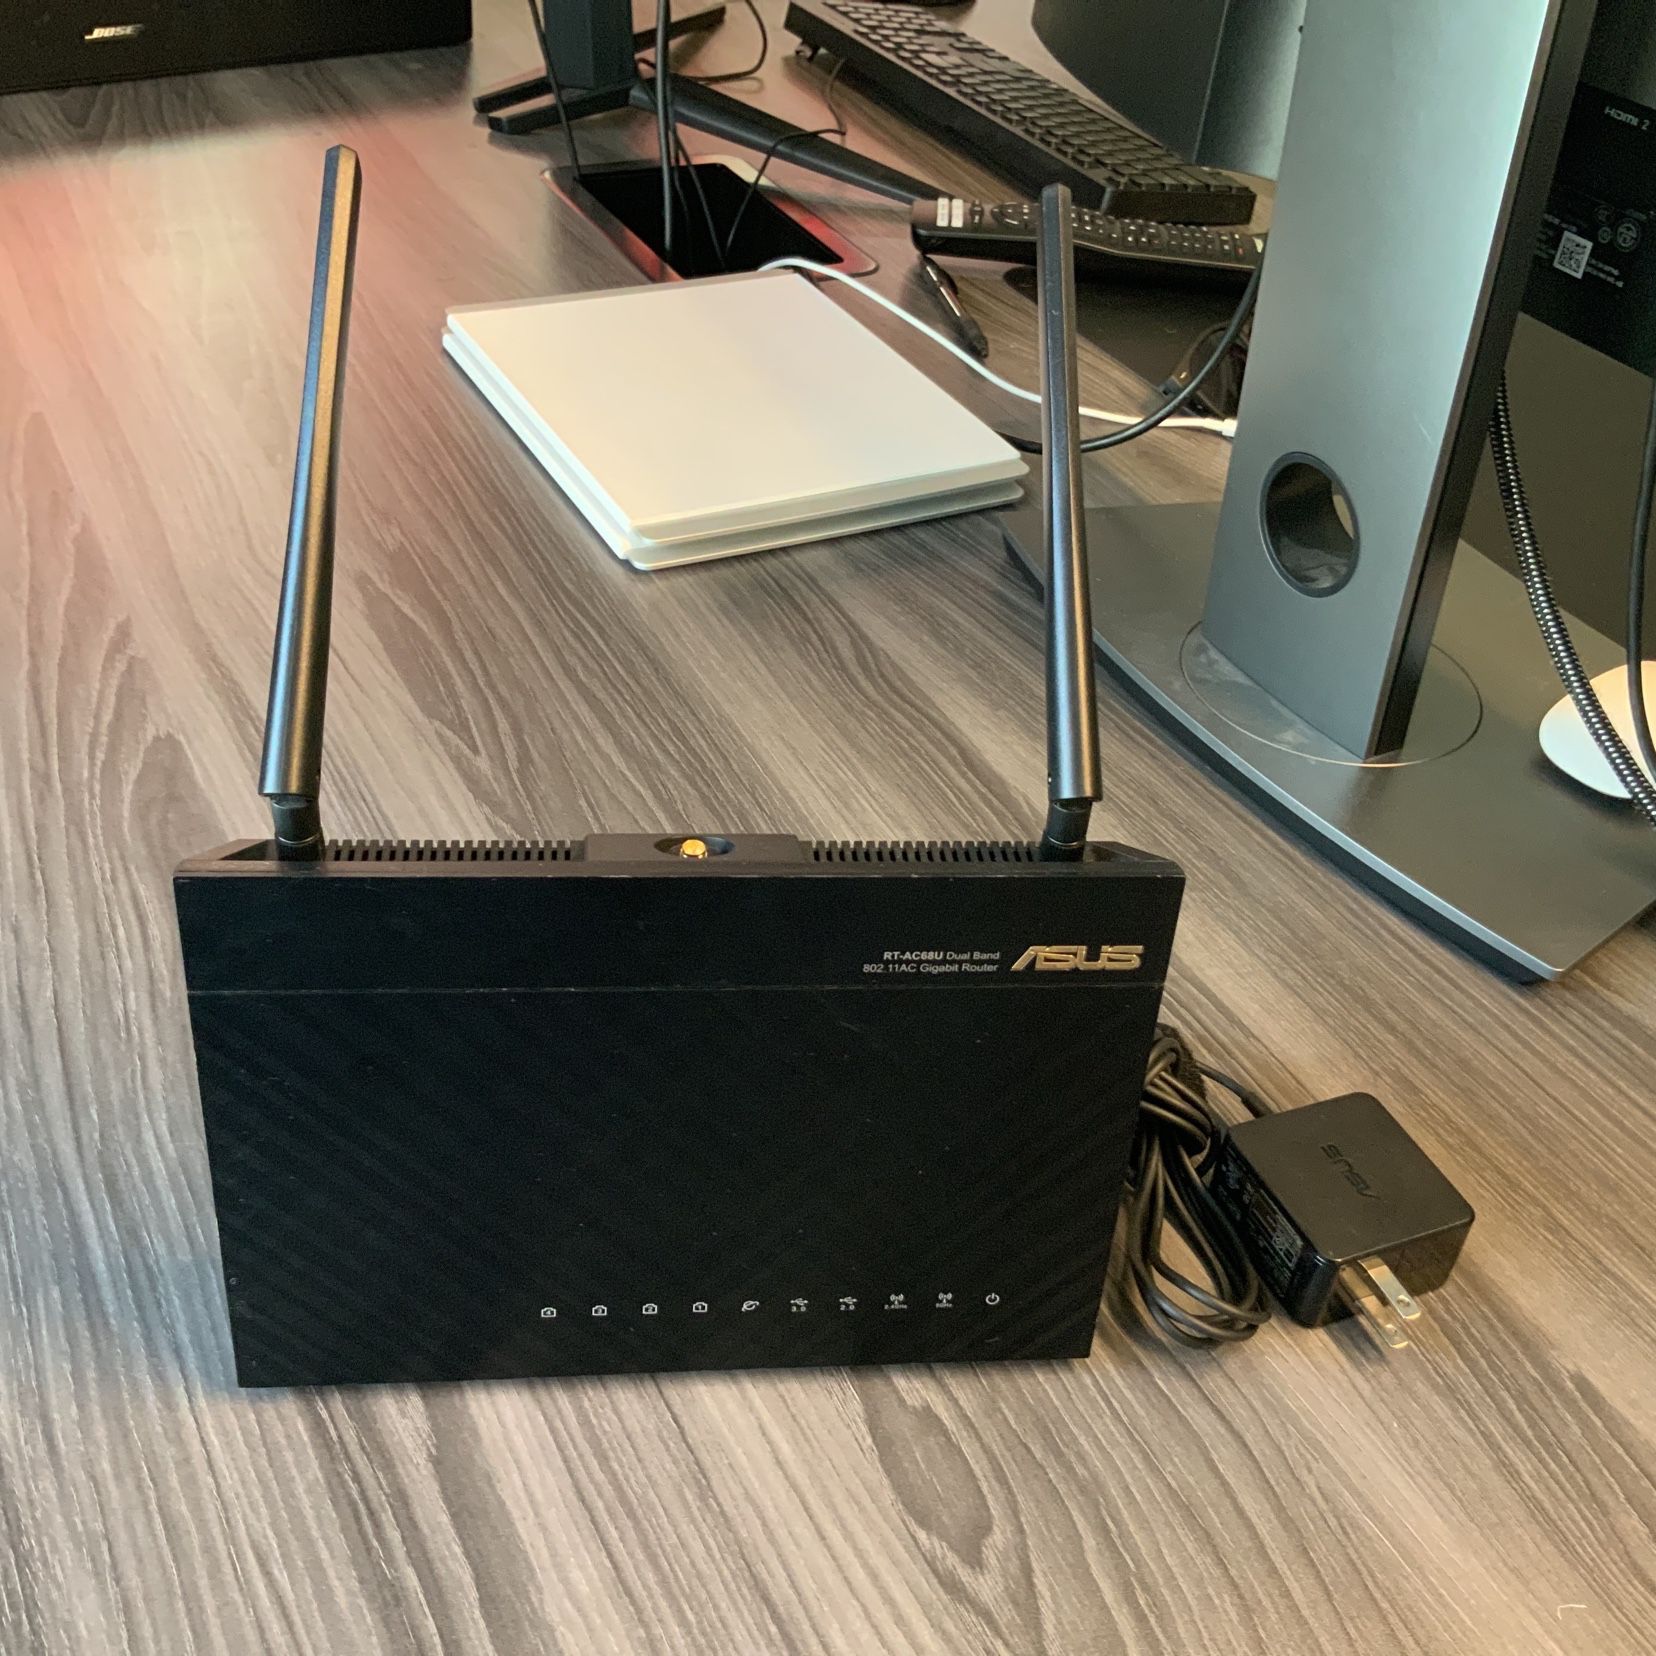 ASUS RT-AC68U - AC1900 Dual Band Gigabit WiFi Router